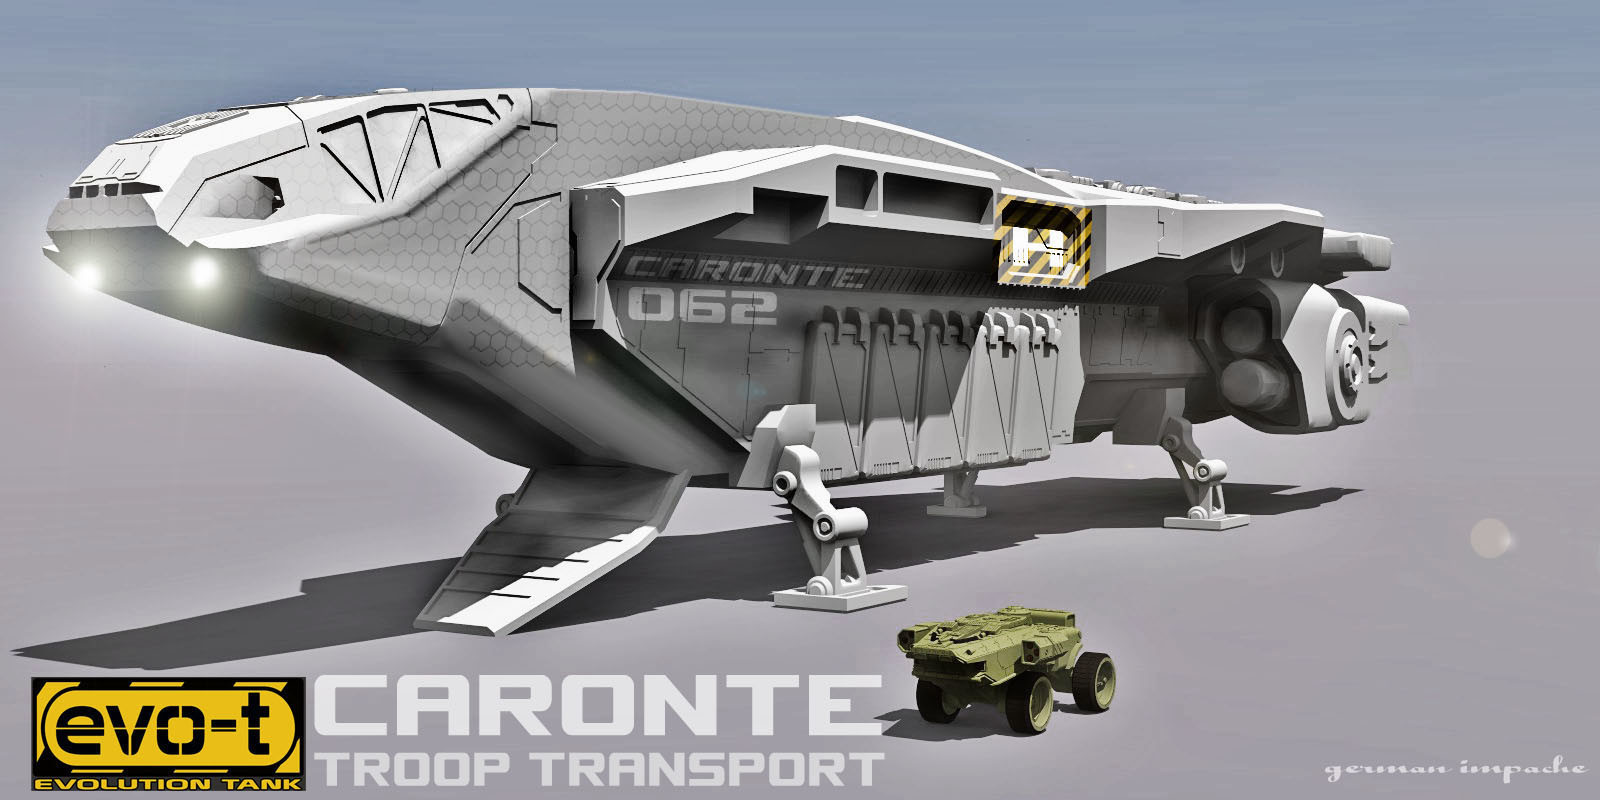 CARONTE Troop Transport
Wip concept
cargo container